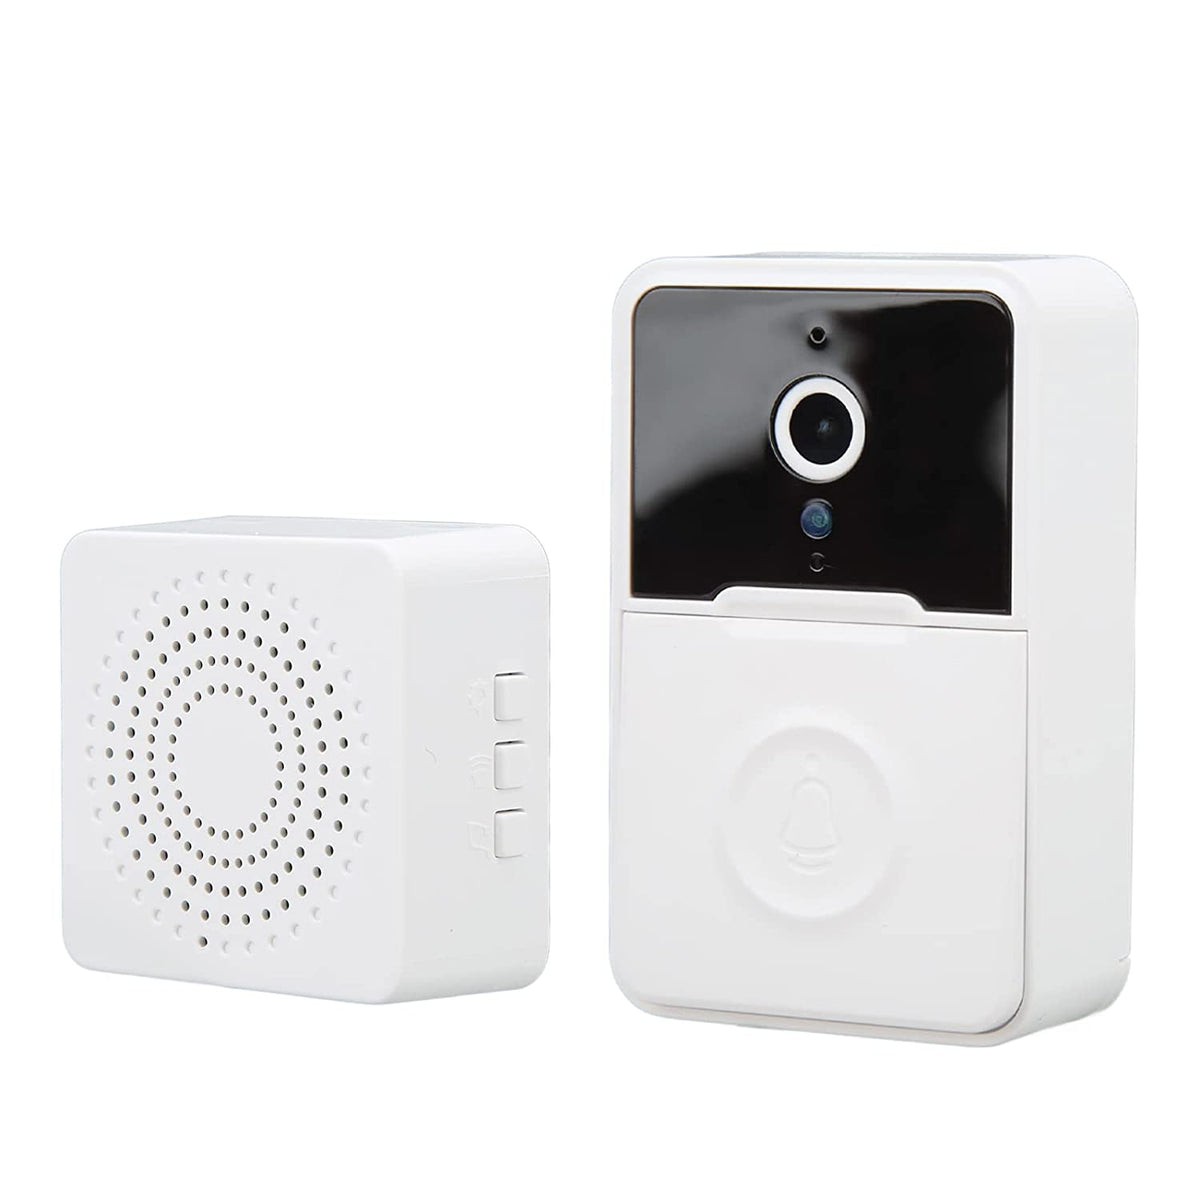 Eaula Videns Video Doorbell Camera, HD WiFi Wireless Battery Power Operated  Motion Detector Audio&Speaker Night Vision，IP65 Outdoor waterproof with